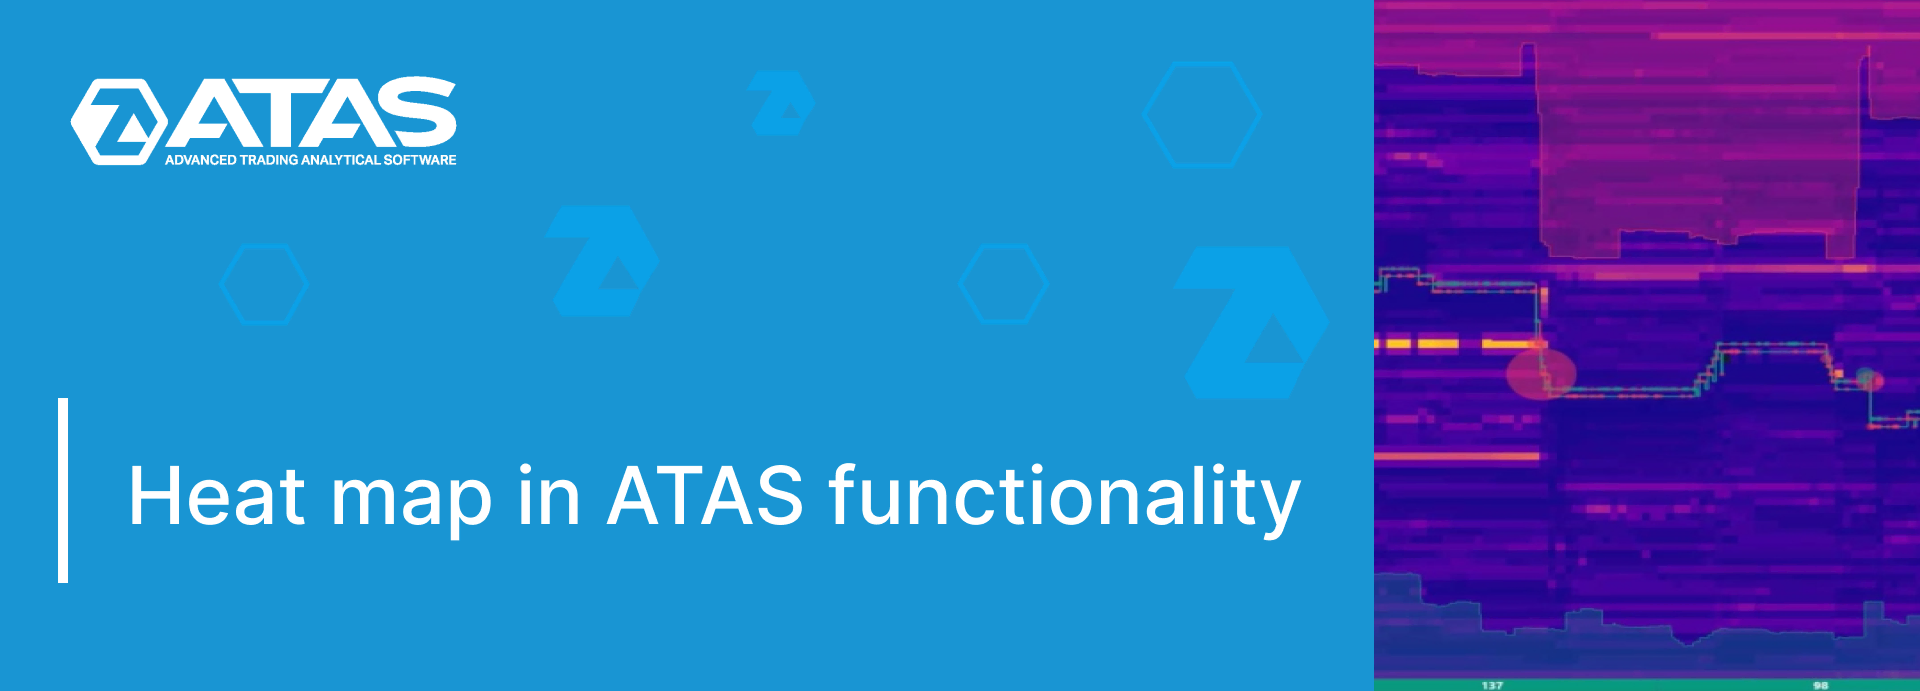 Heat map in ATAS functionality